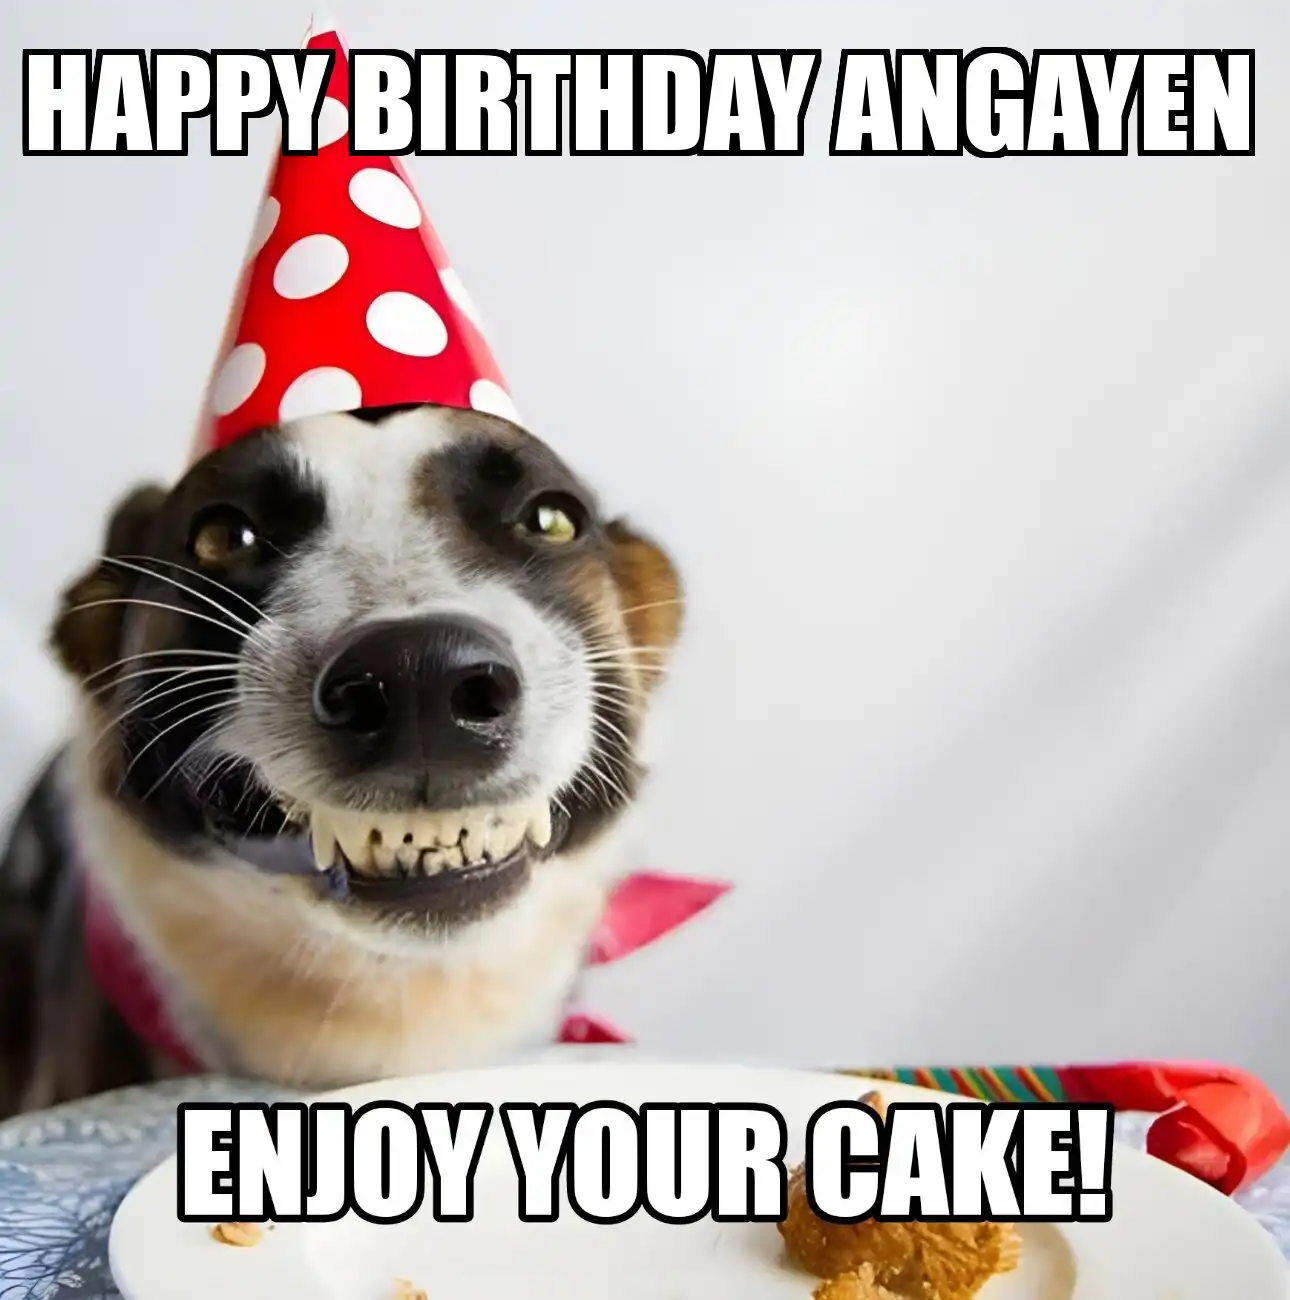 Happy Birthday Angayen Enjoy Your Cake Dog Meme